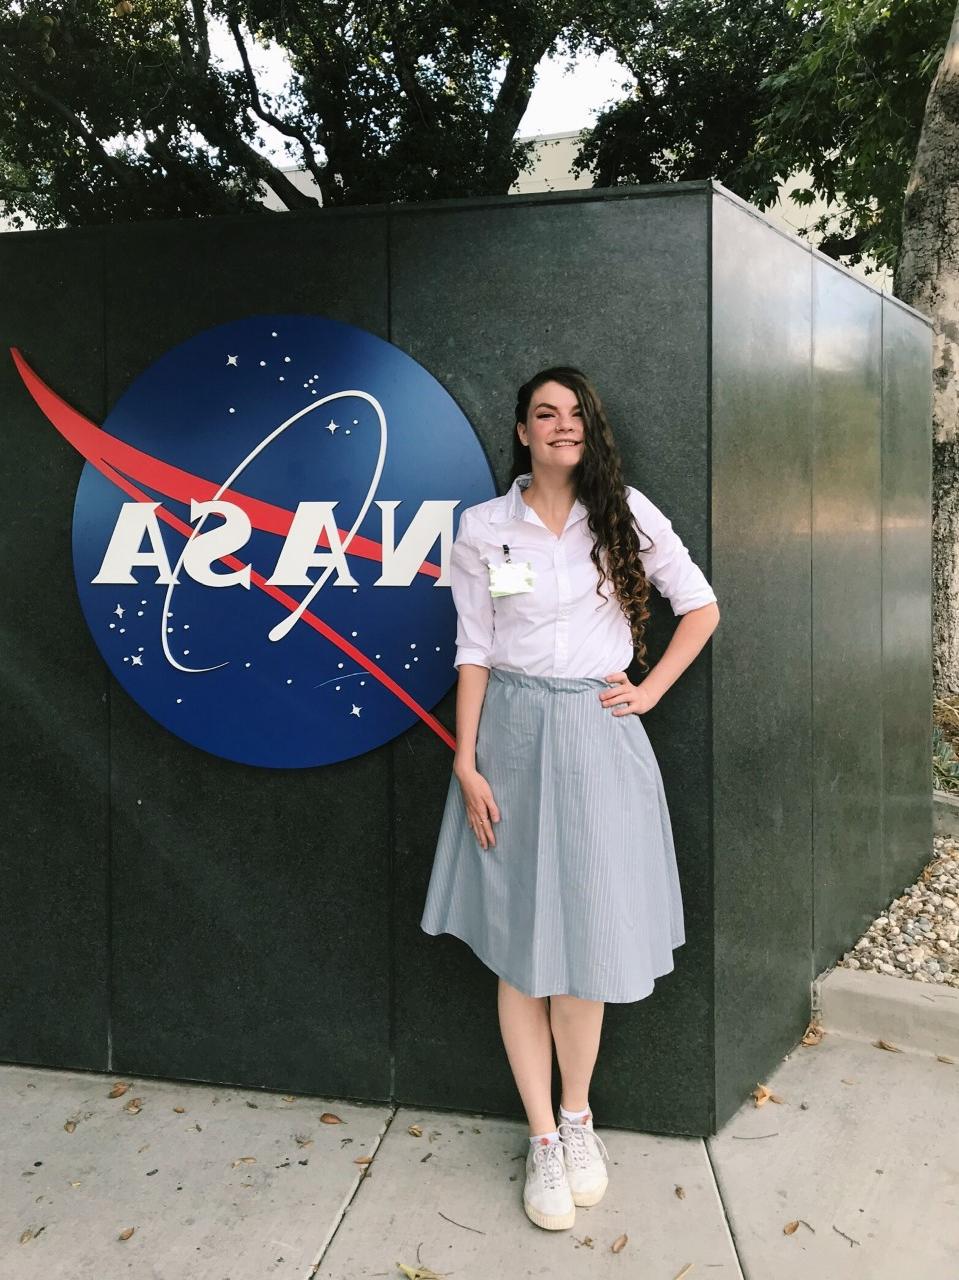 Deborah poses for photo outside of NASA